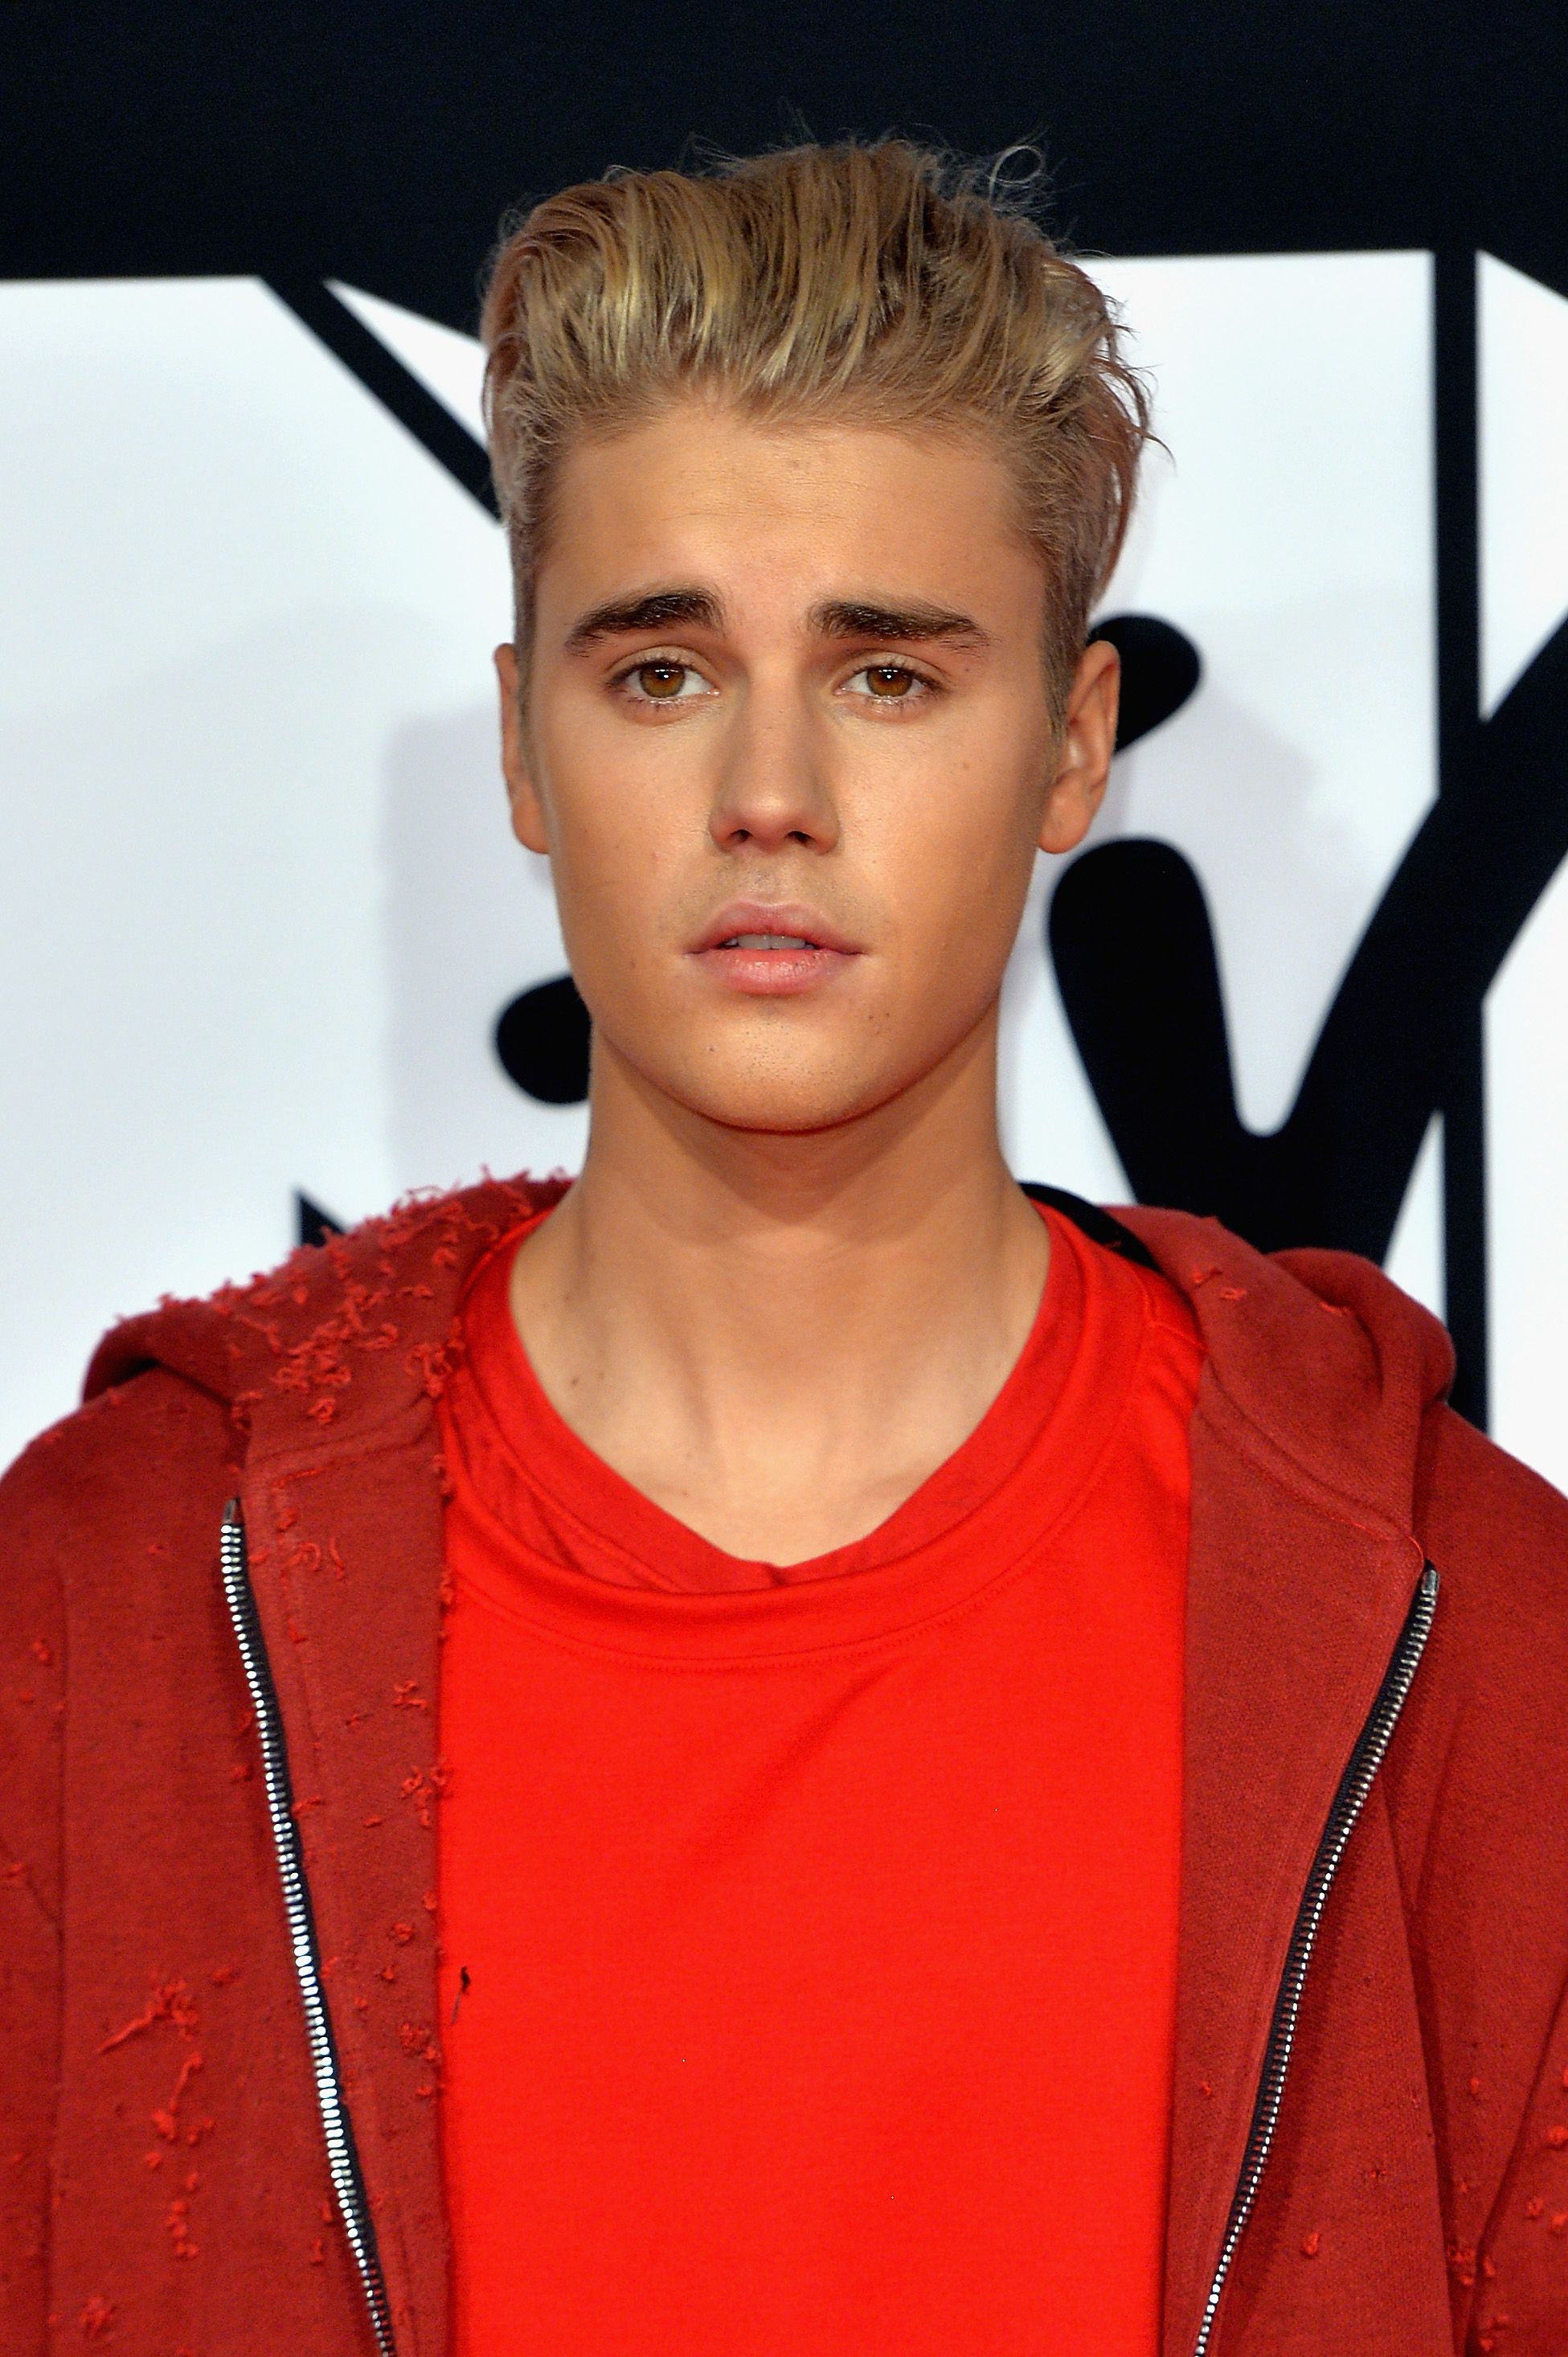 Justin Bieber attends the MTV EMAs 2015 21